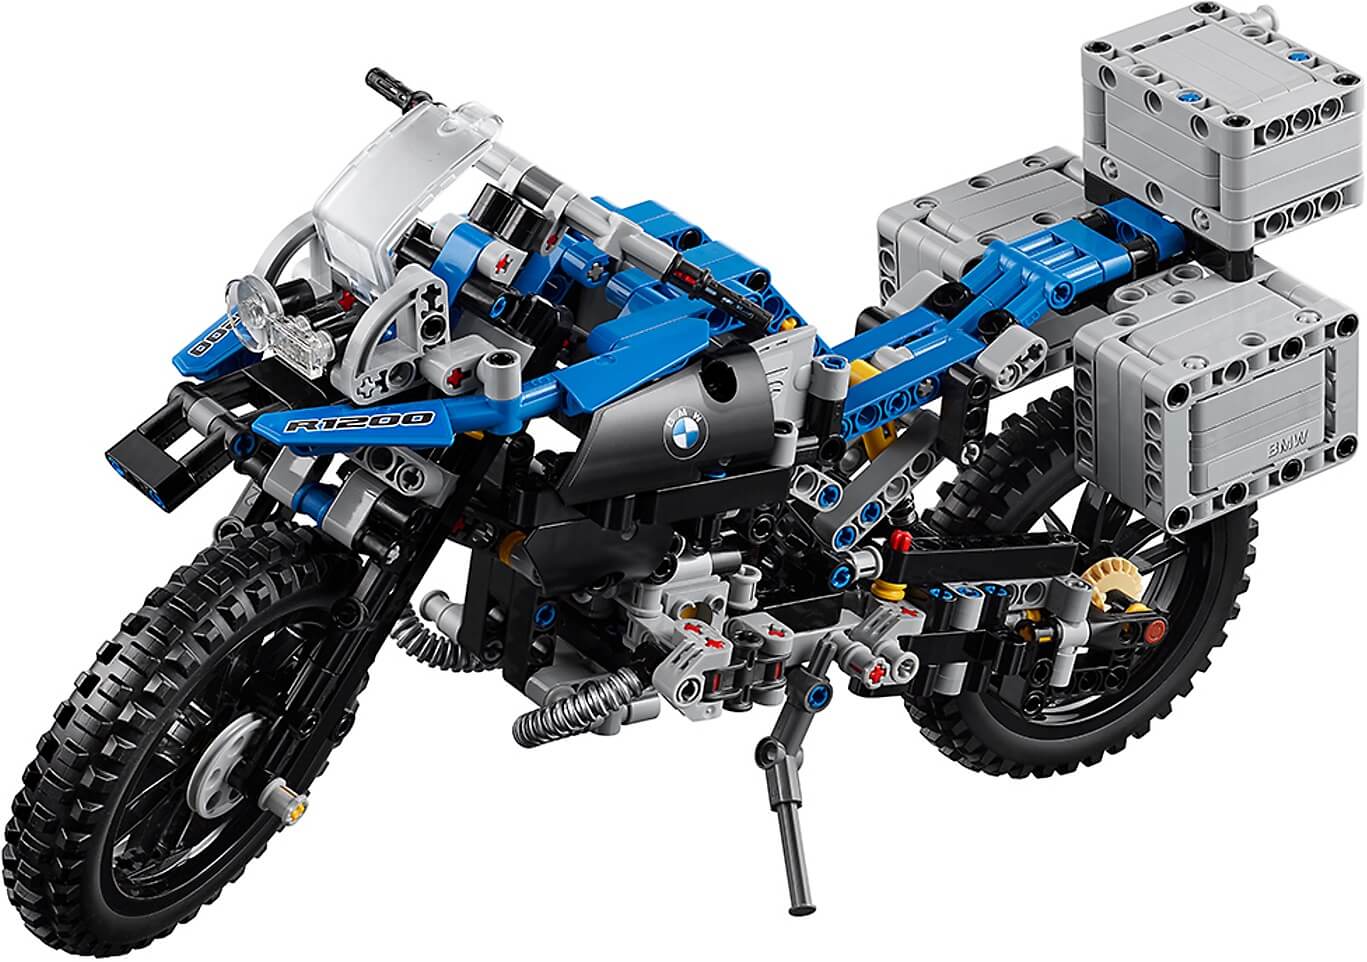 BMW R 1200 GS Adventure ( Lego 42063 ) imagen a